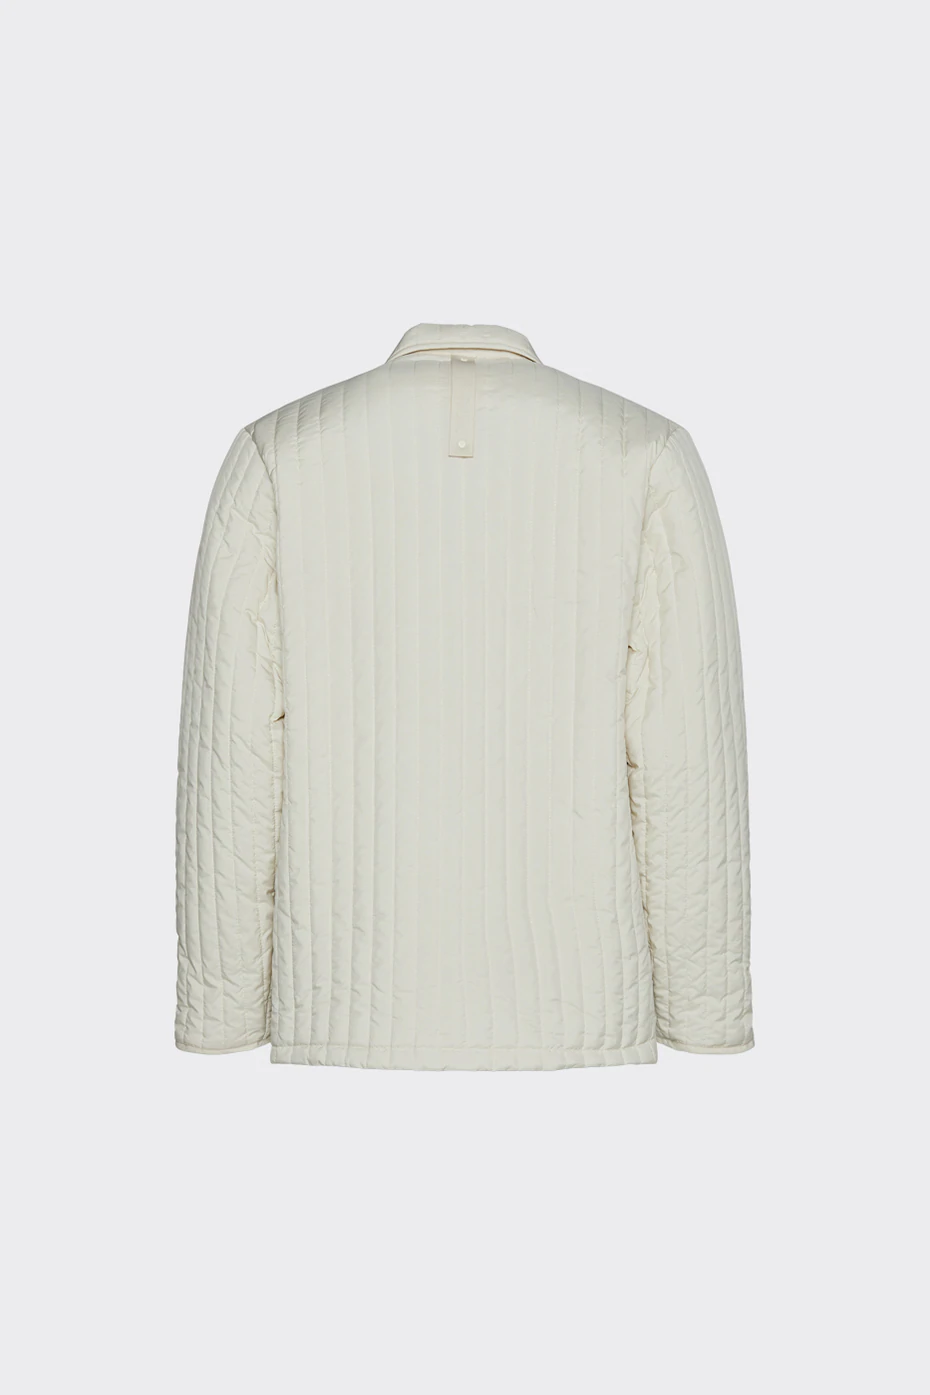 RAINS 18610/liner shirt jacket